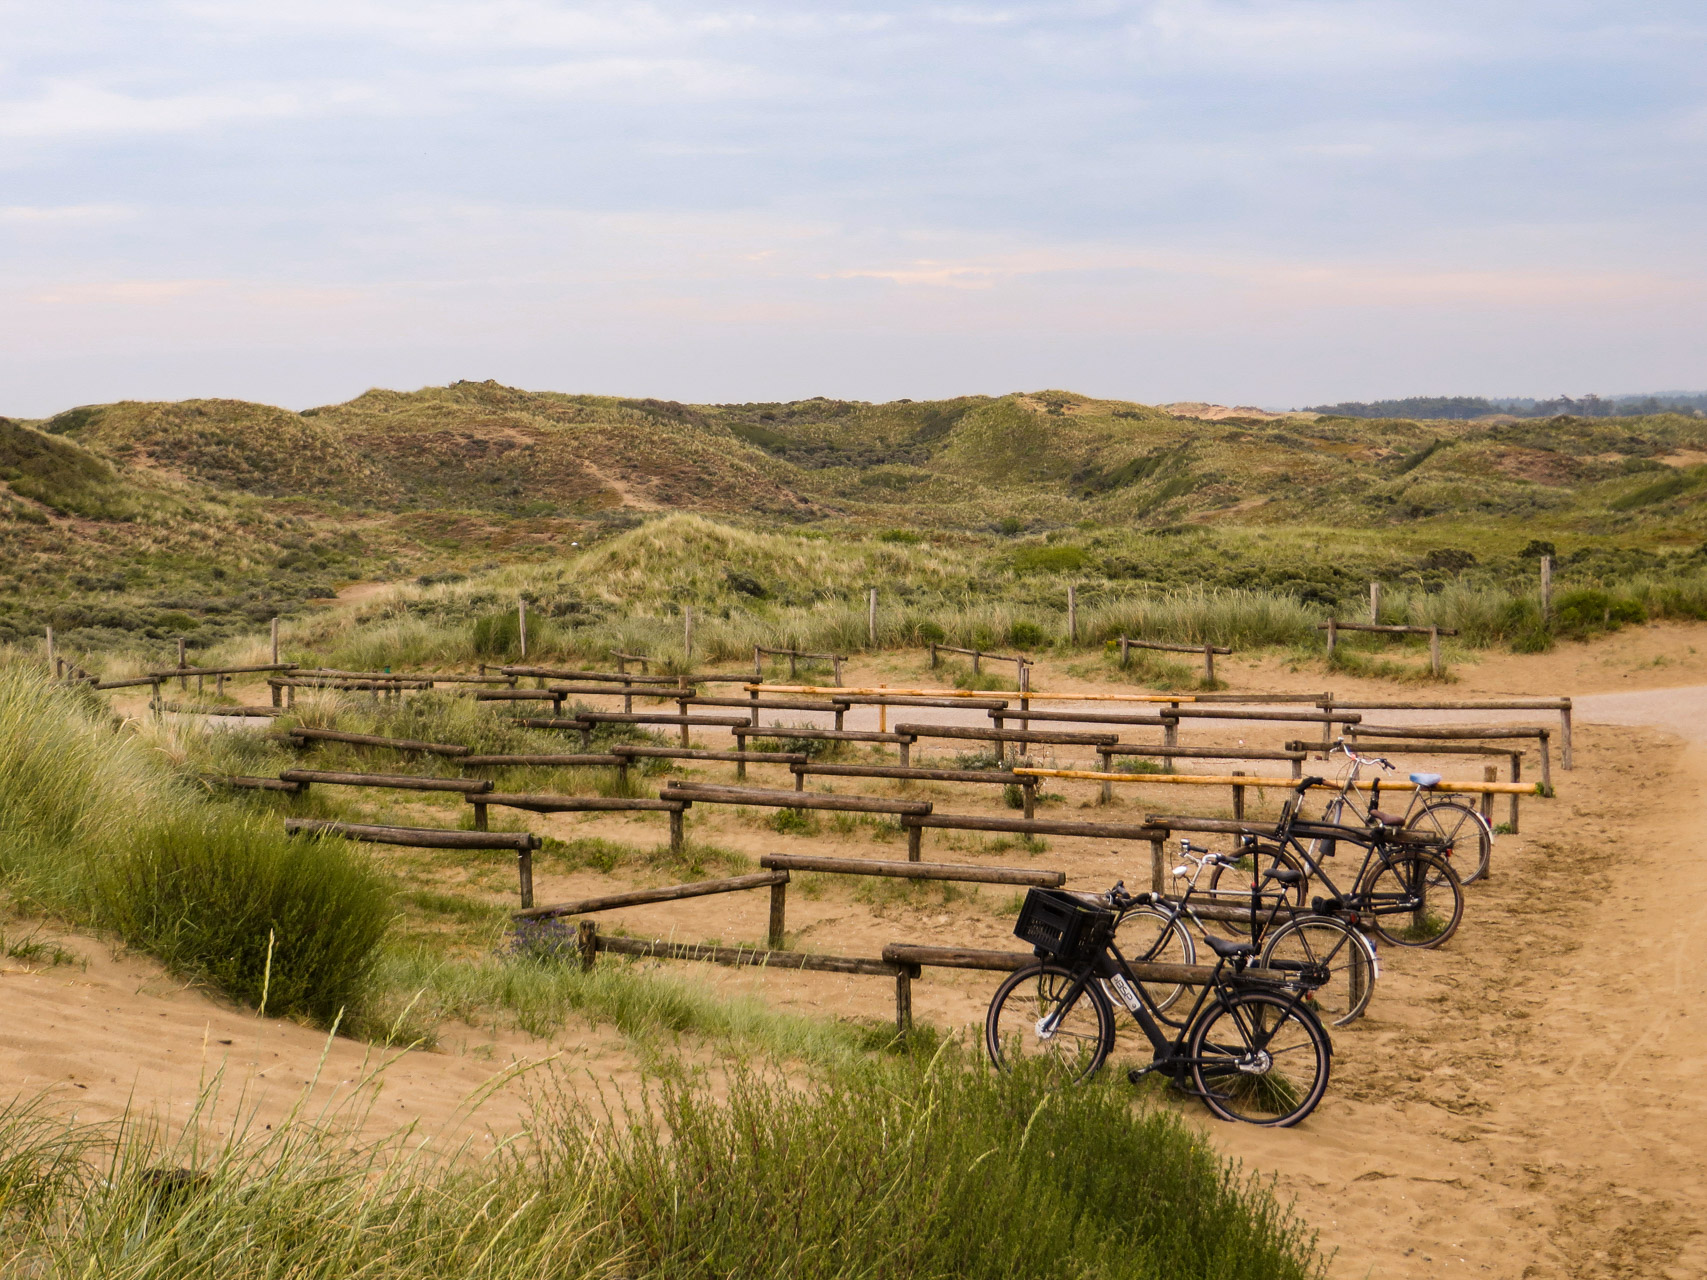 Dunes in the Netherlands